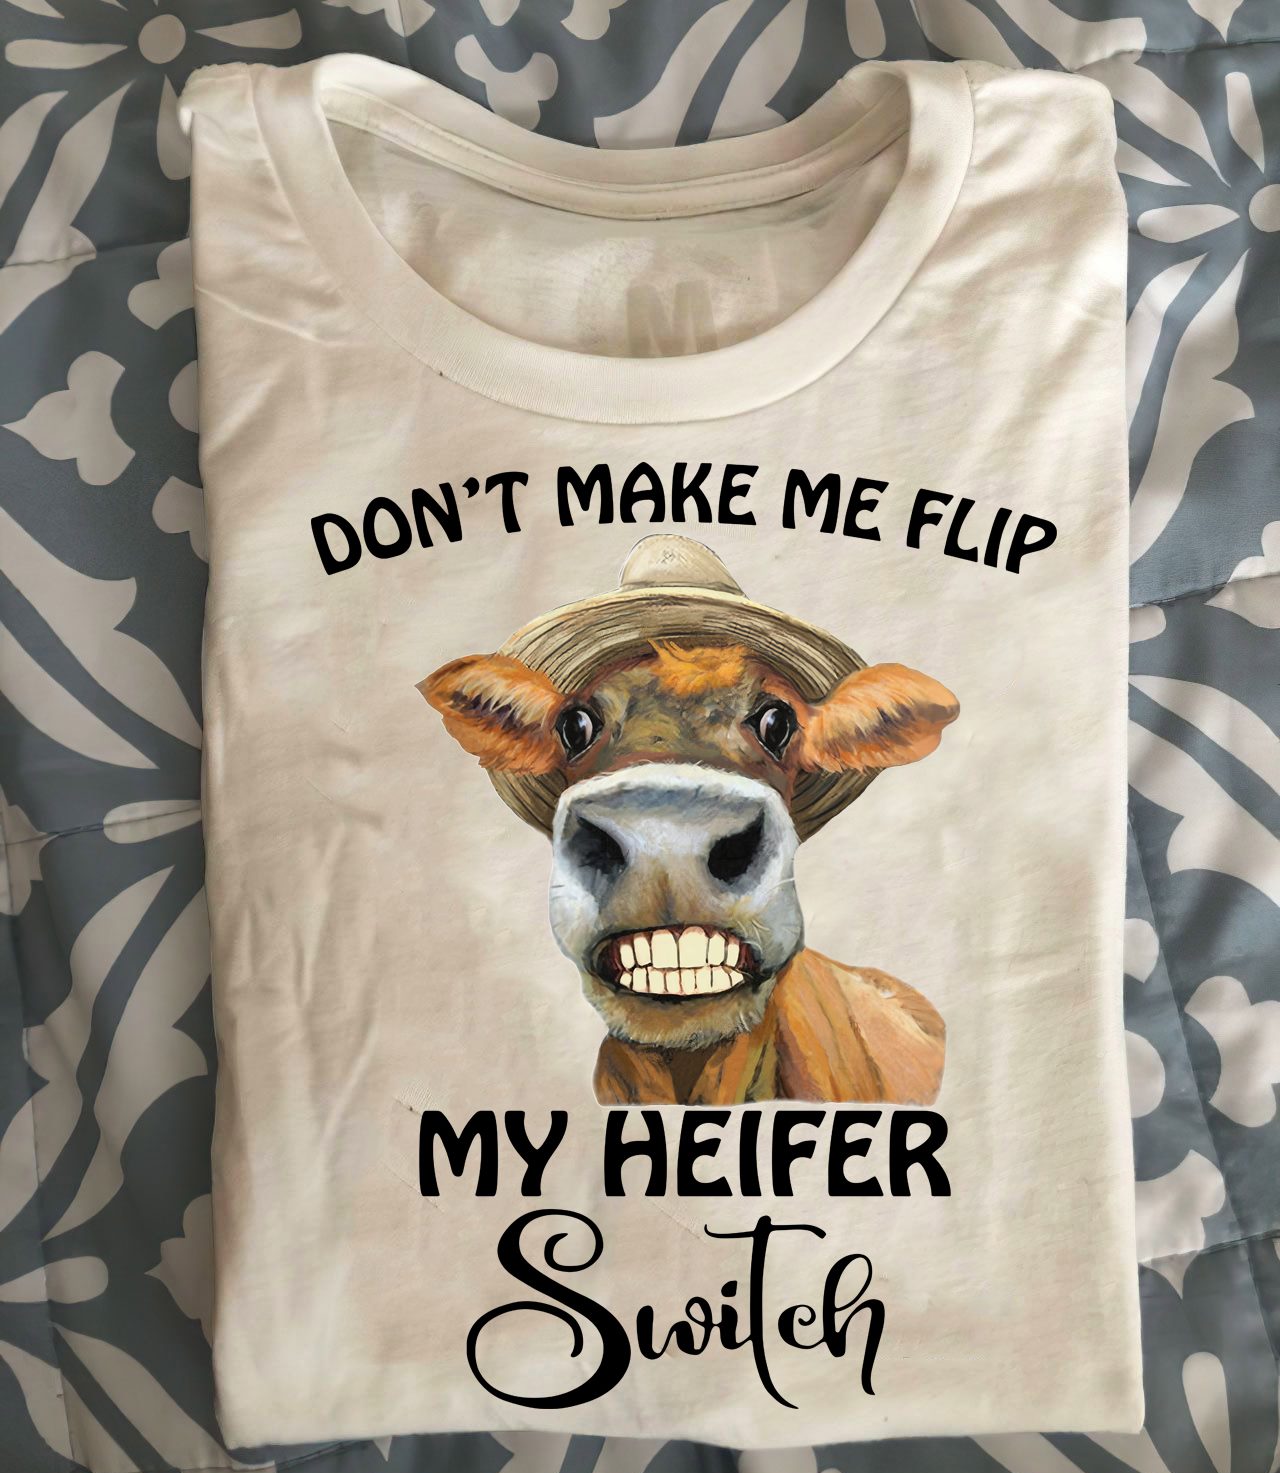 Don't make me flip my heifer switch - Grumpy cow with hat